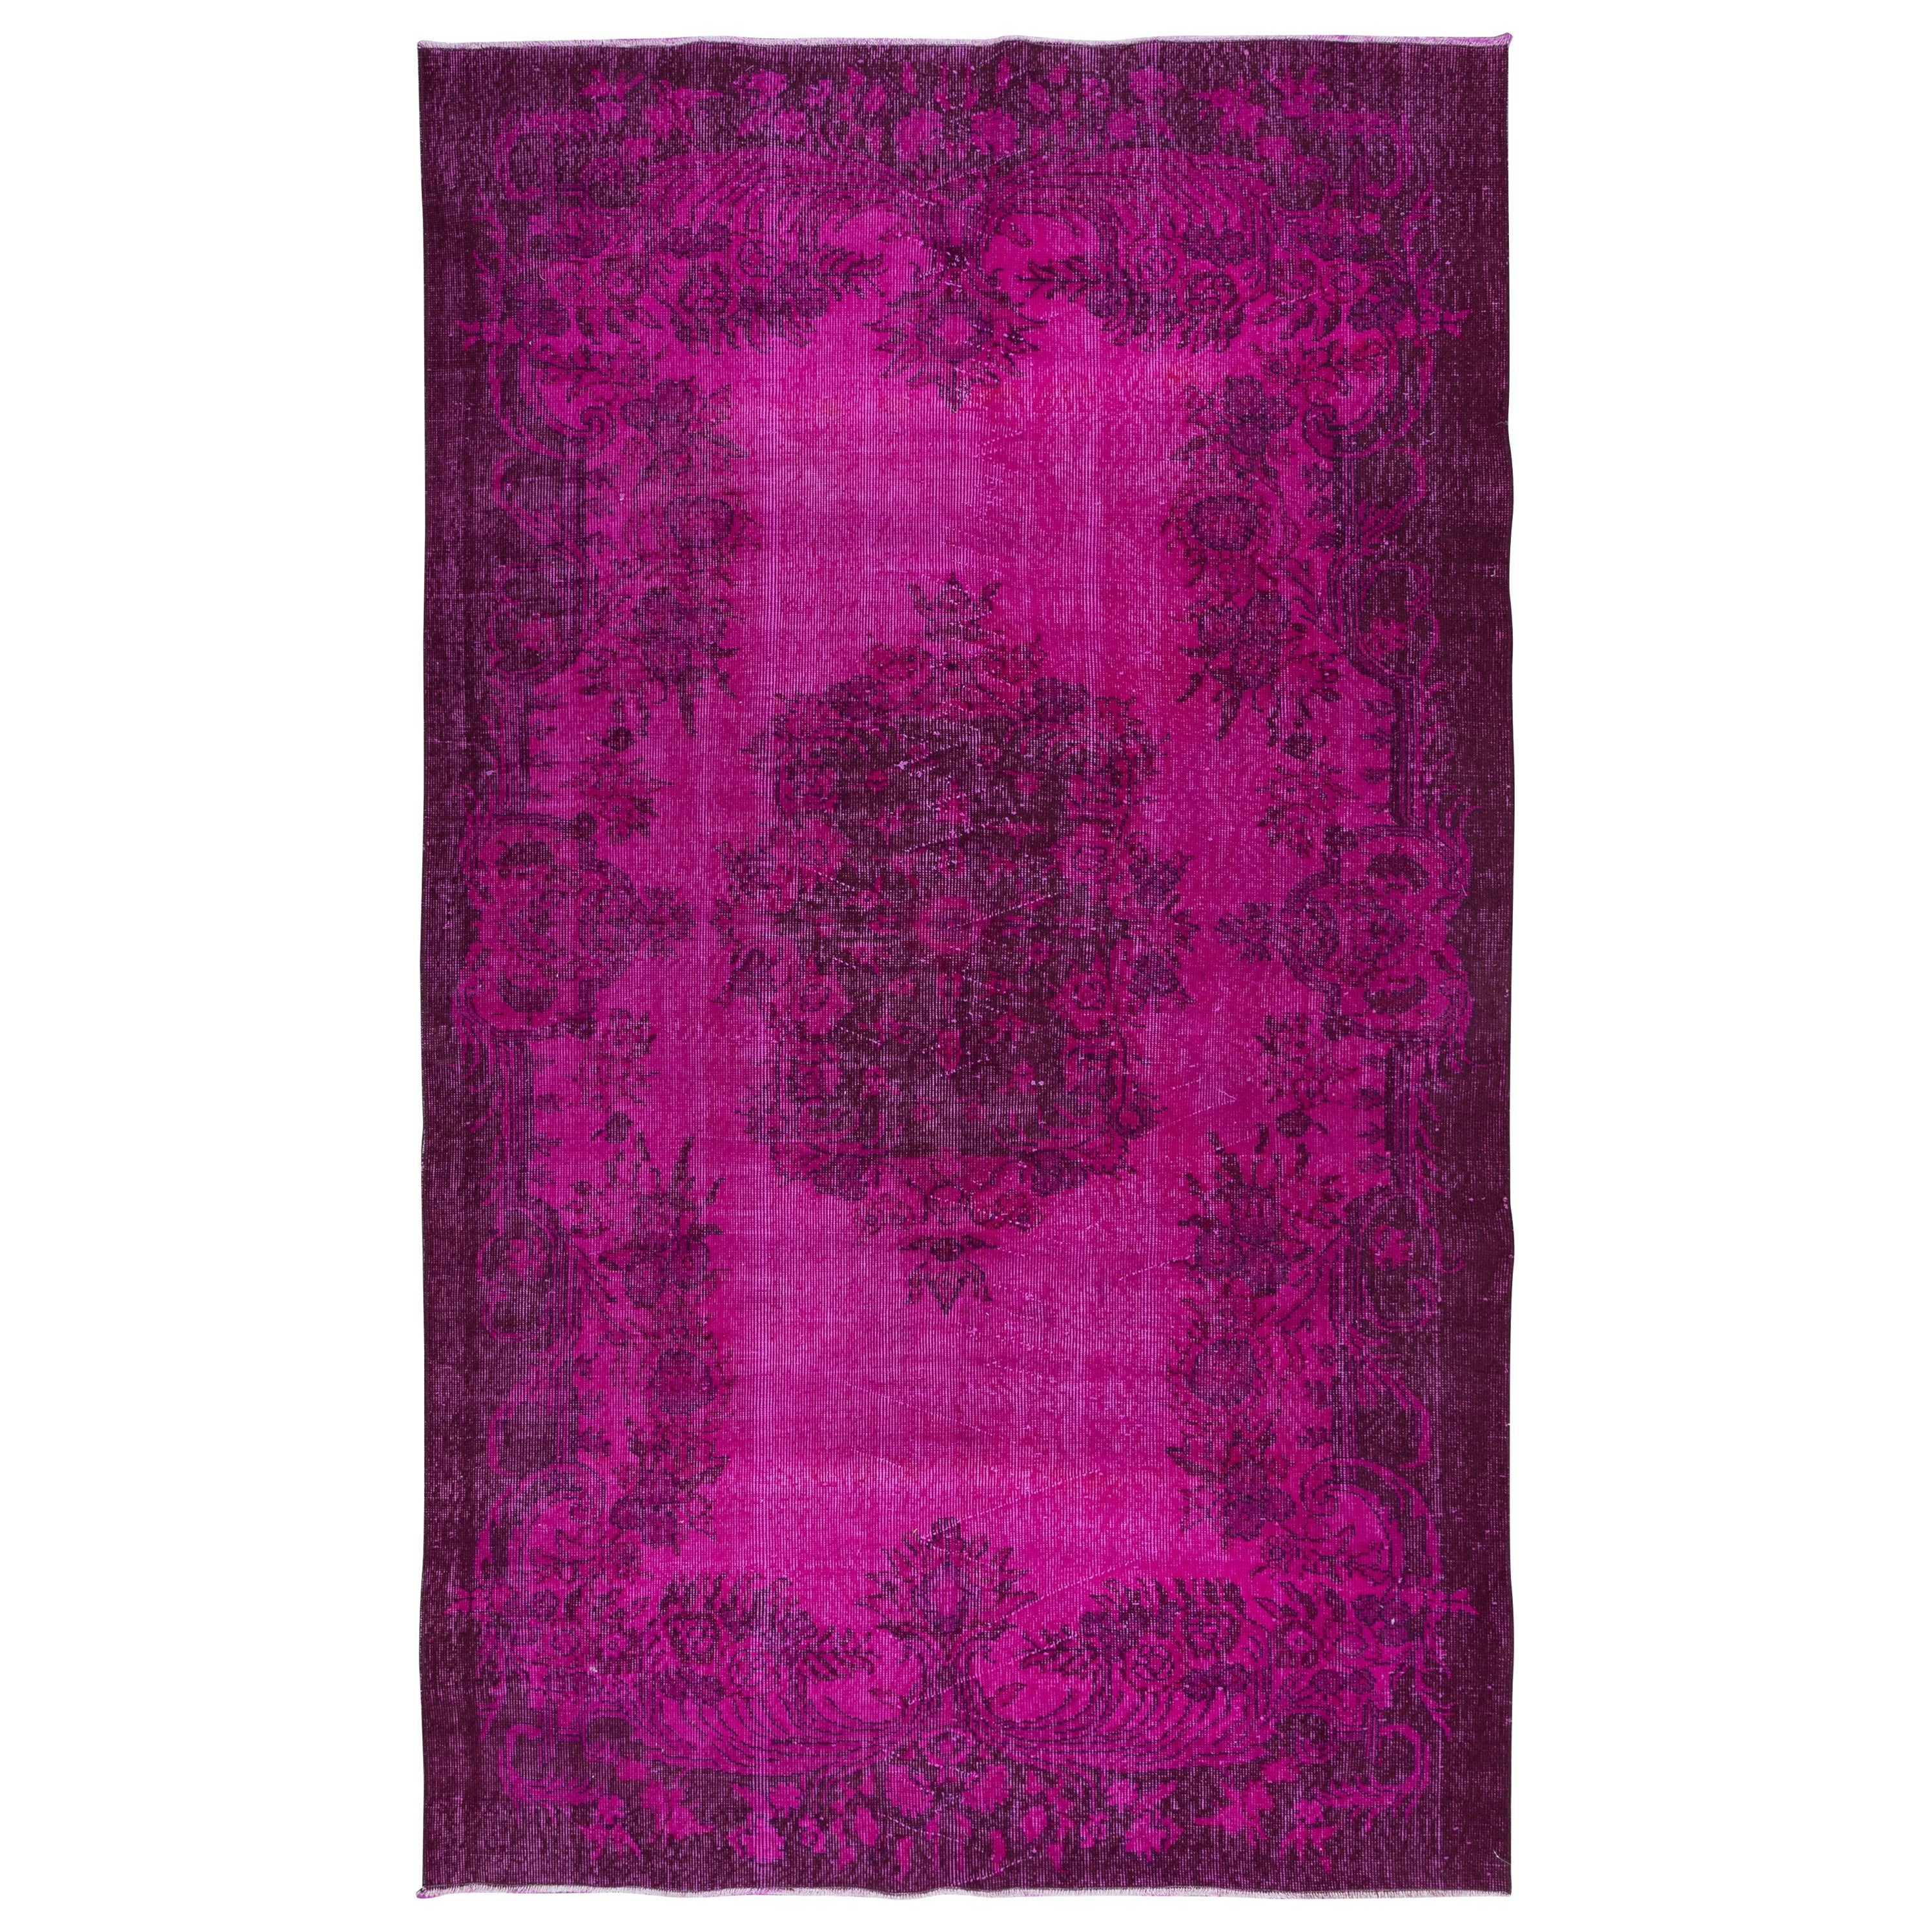 5.7x9.2 Ft Aubusson Inspired Pink Rug for Modern Interiors, Handmade in Turkey